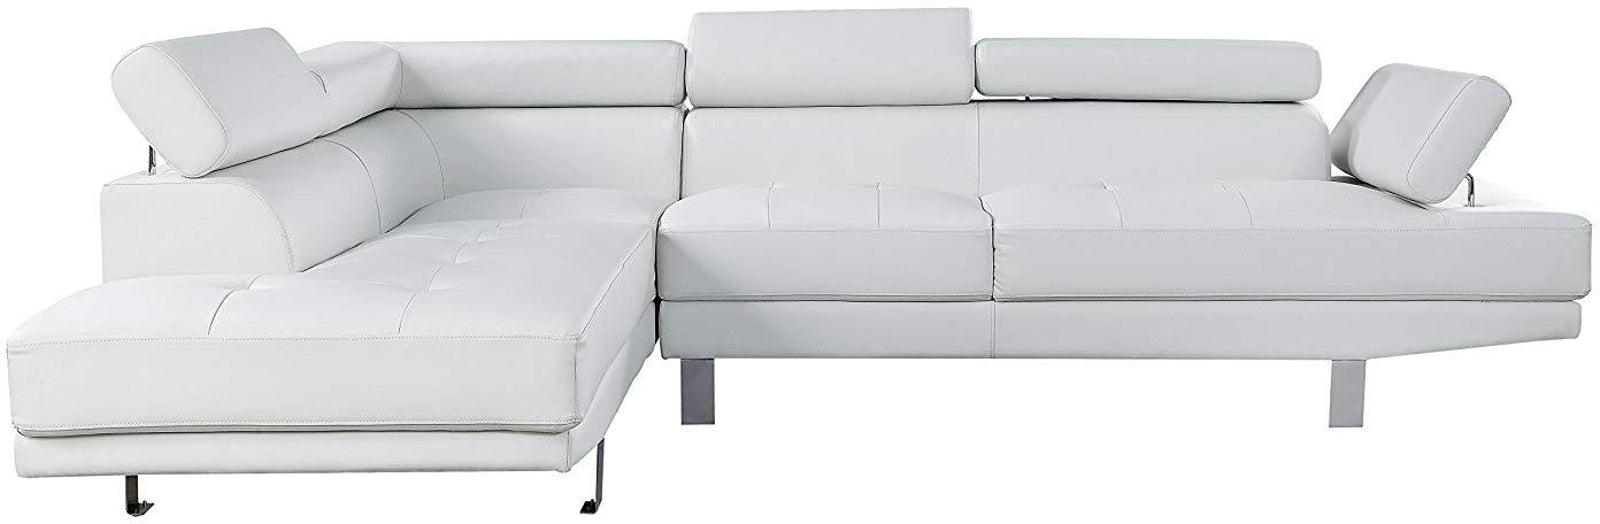 Acme Furniture Connor Sectional Sofa Set in Cream 52645 image